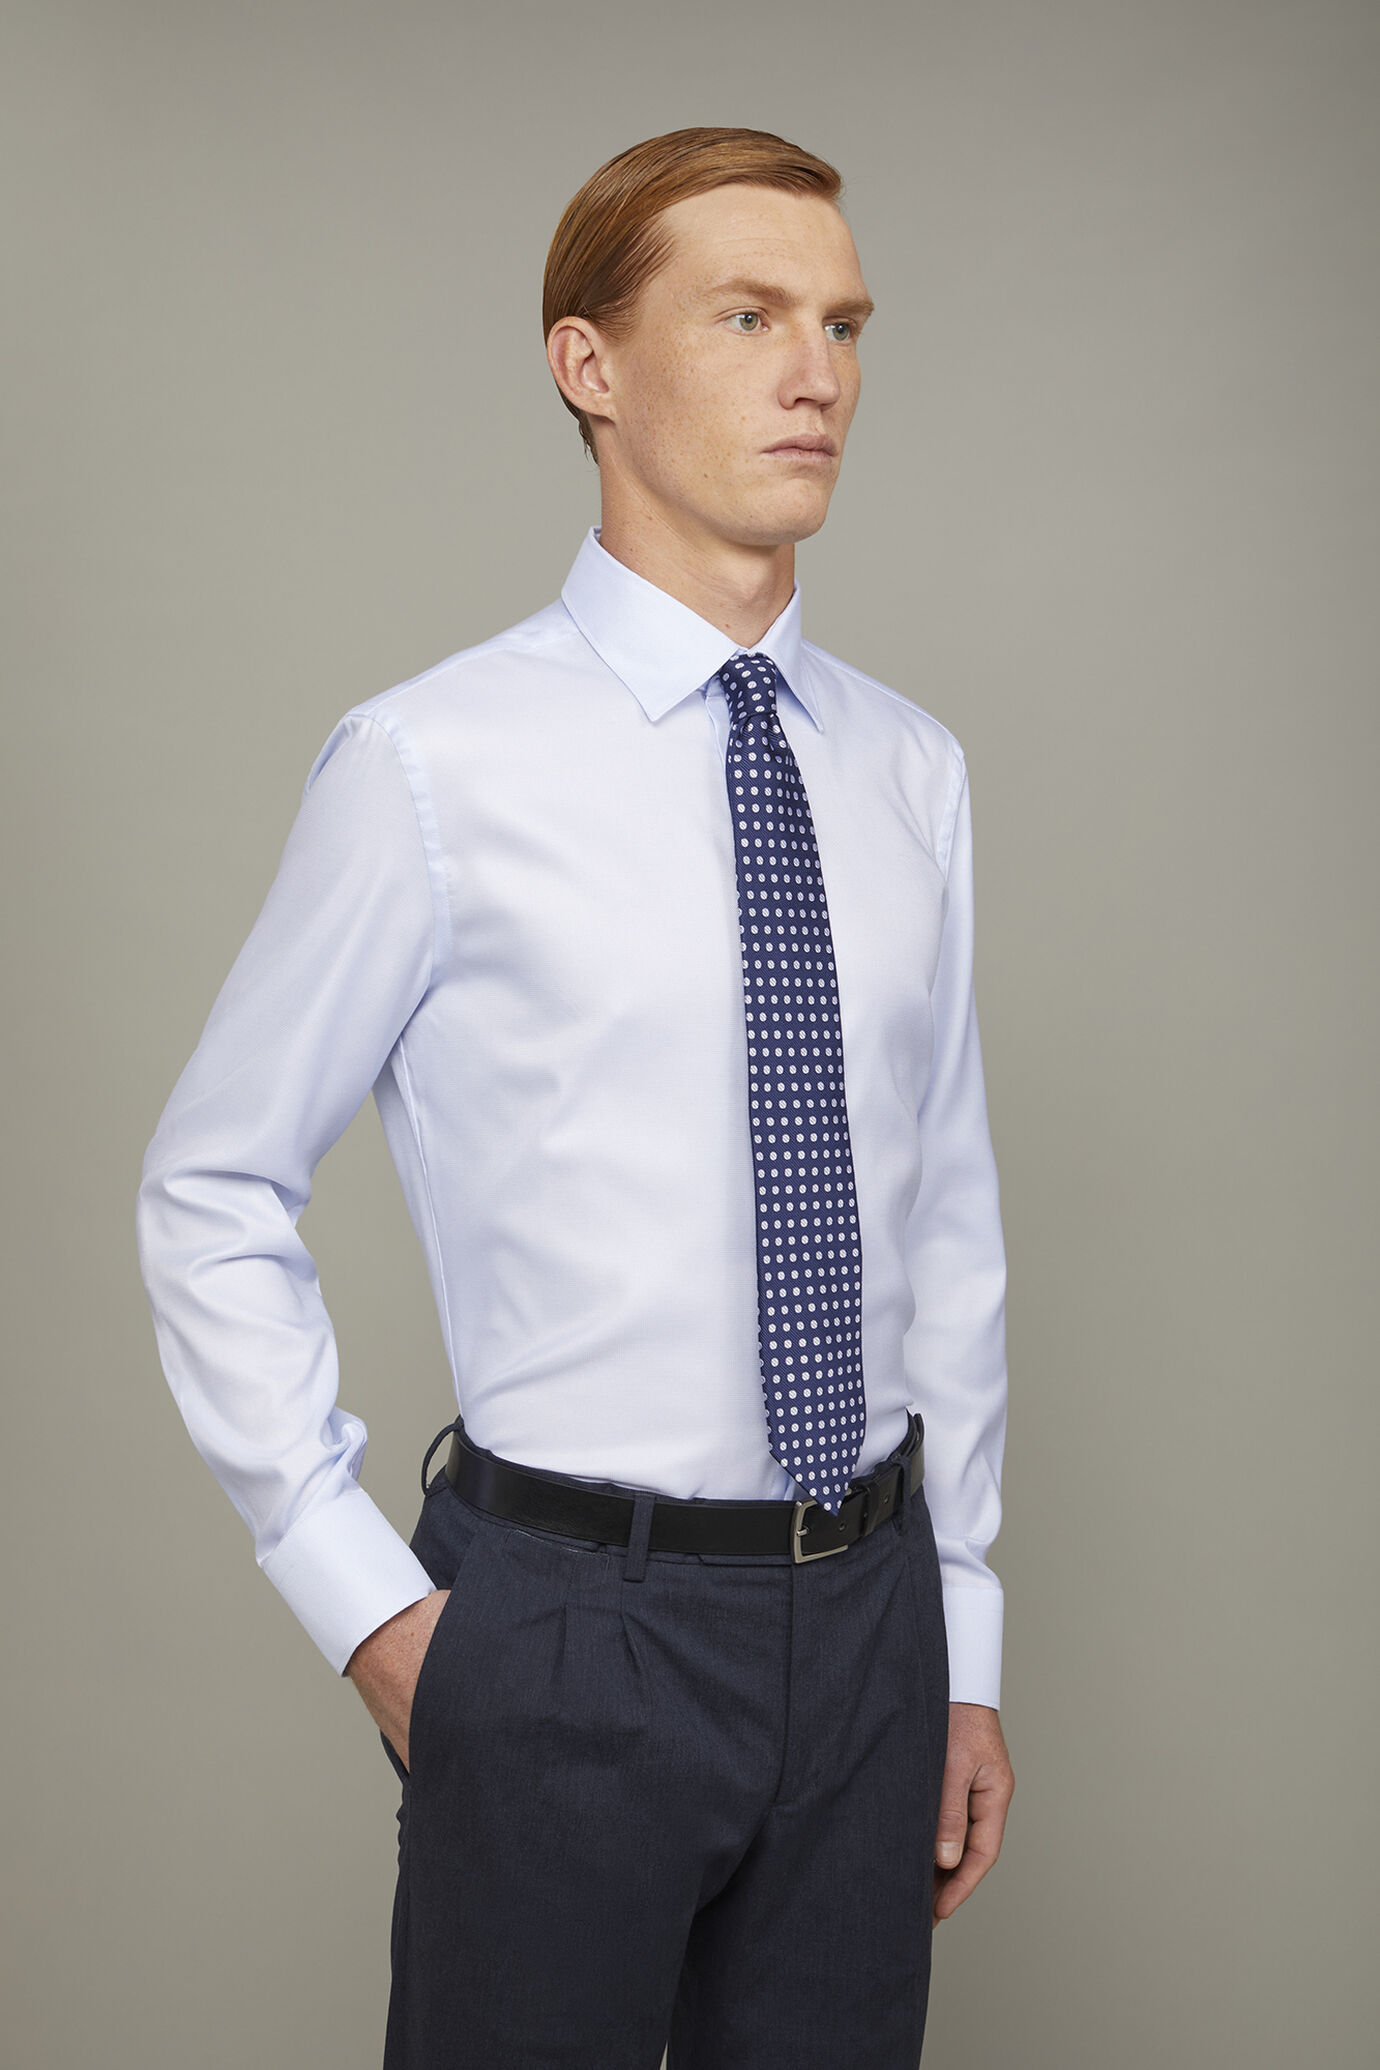 Men's shirt with classic collar 100% cotton plain fabric regular fit